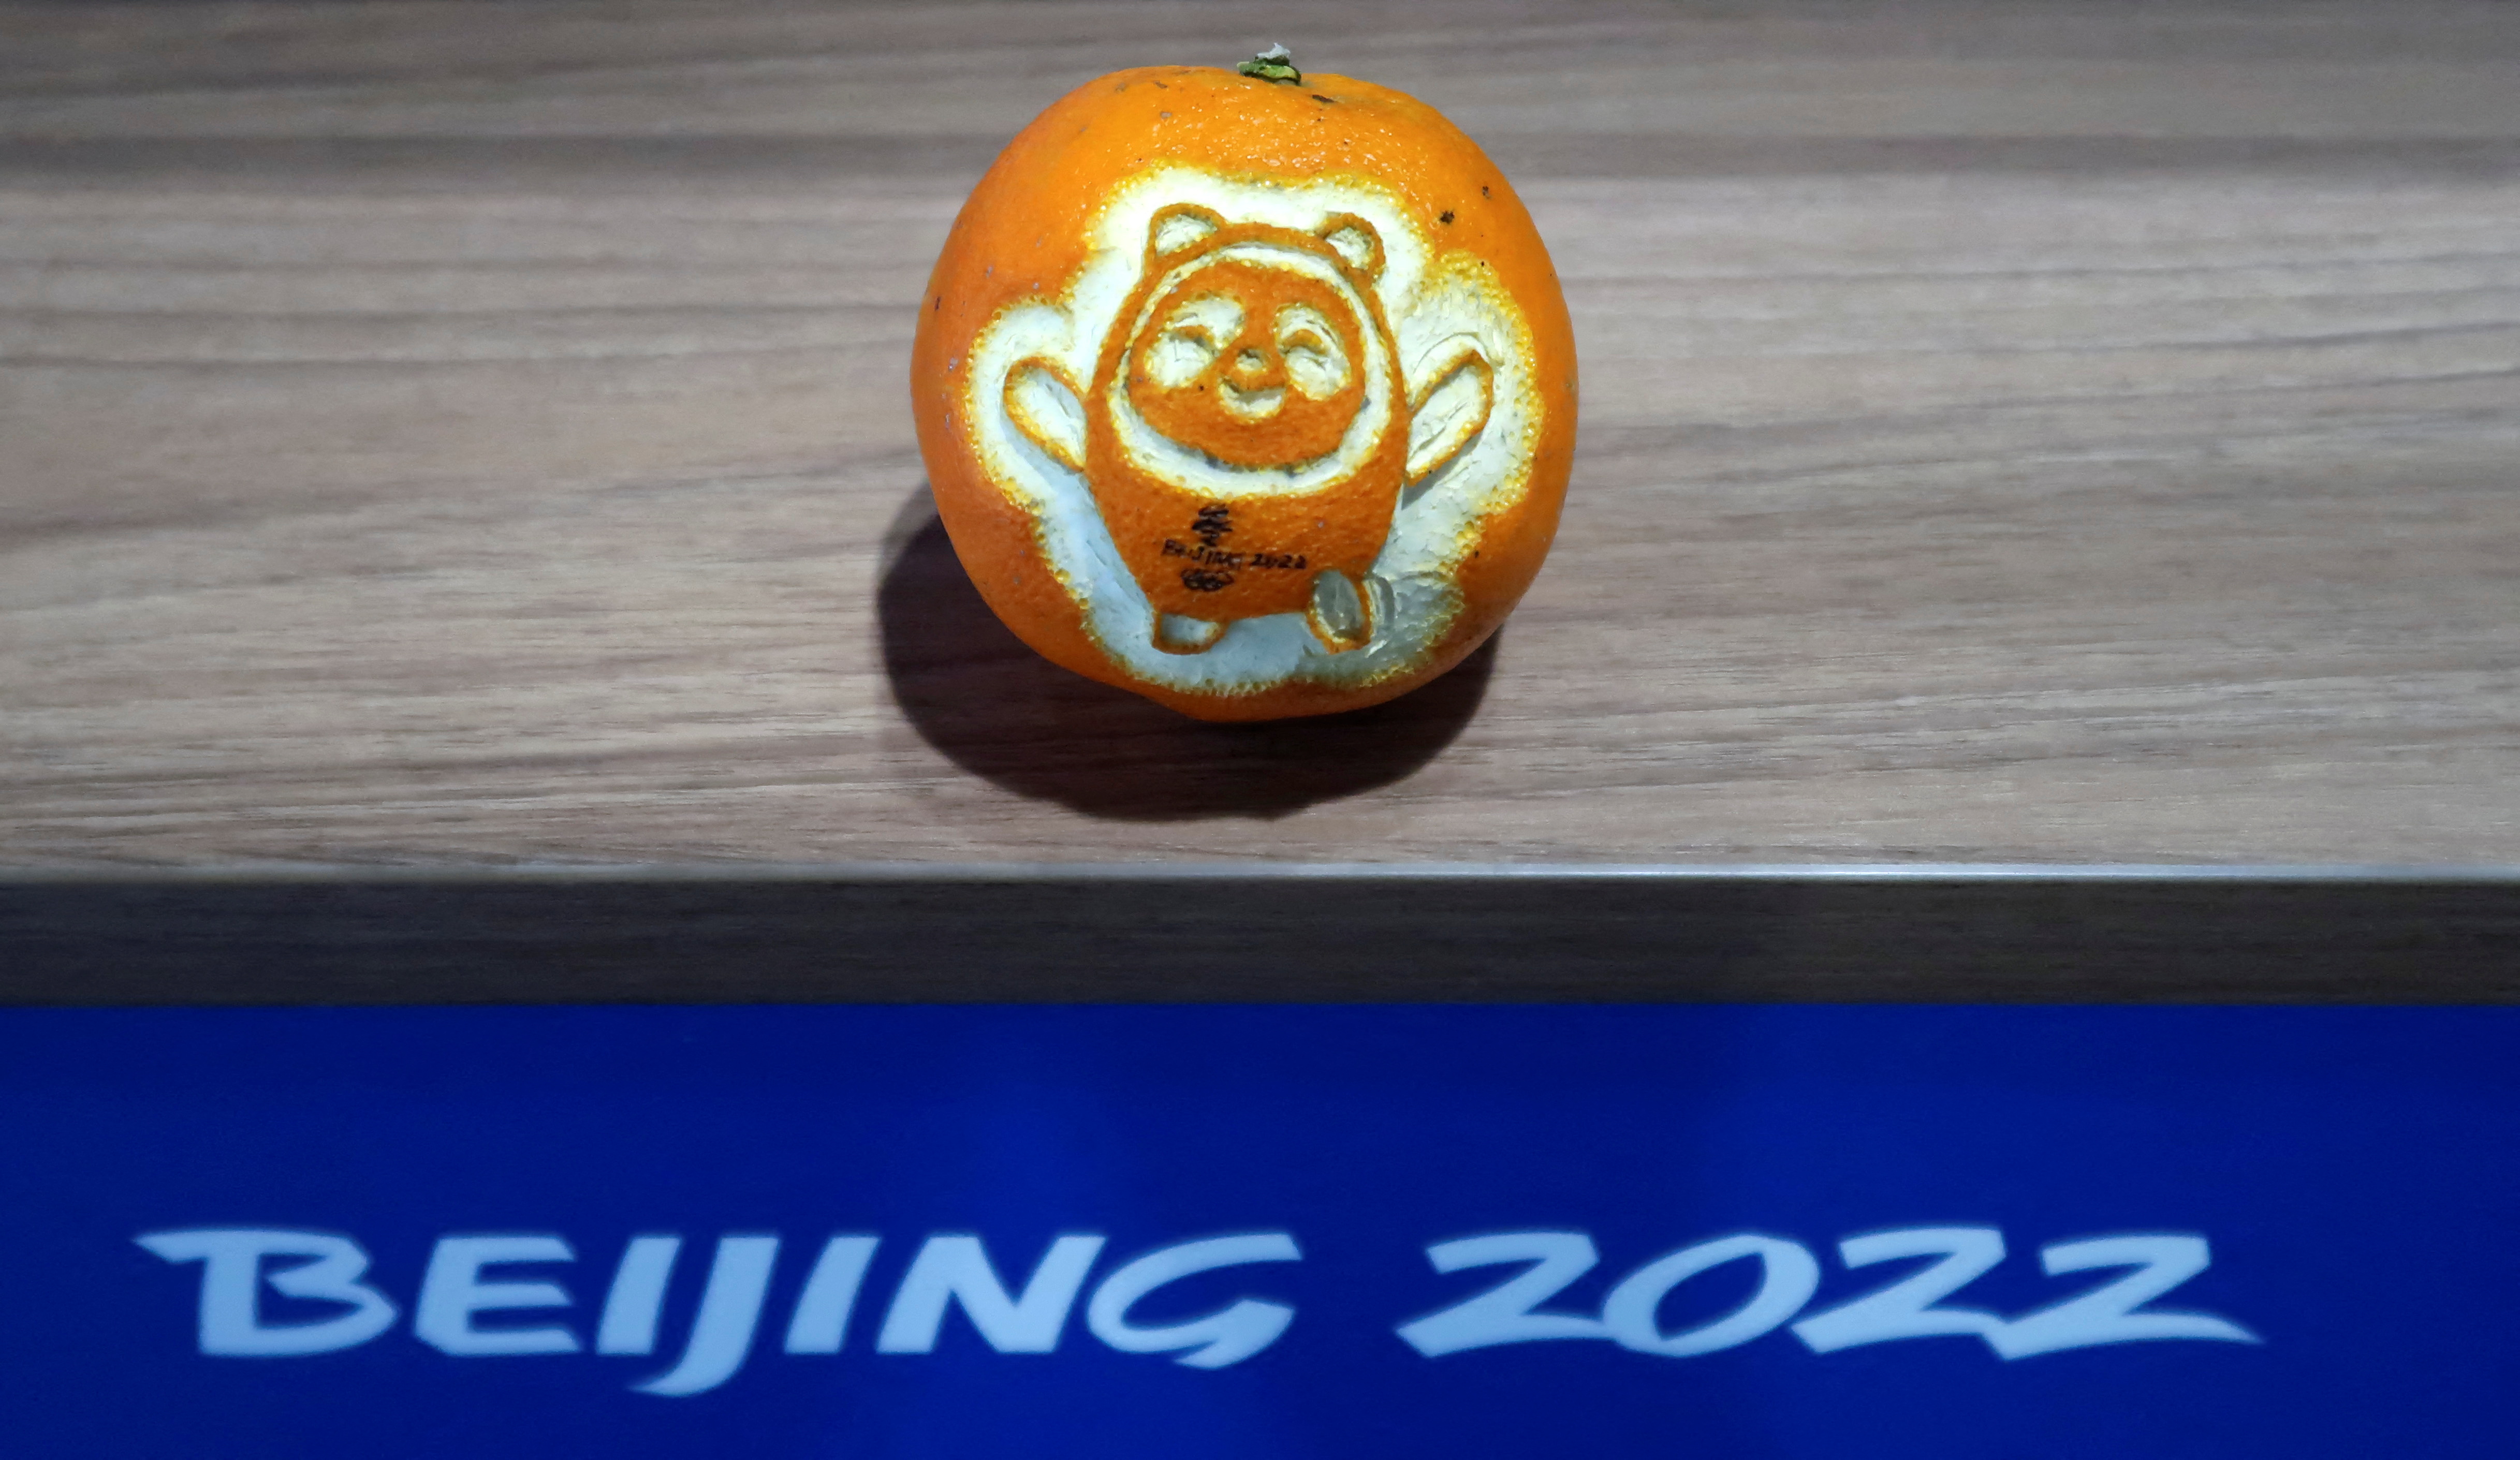 Preparations ahead of the Beijing 2022 Winter Olympics